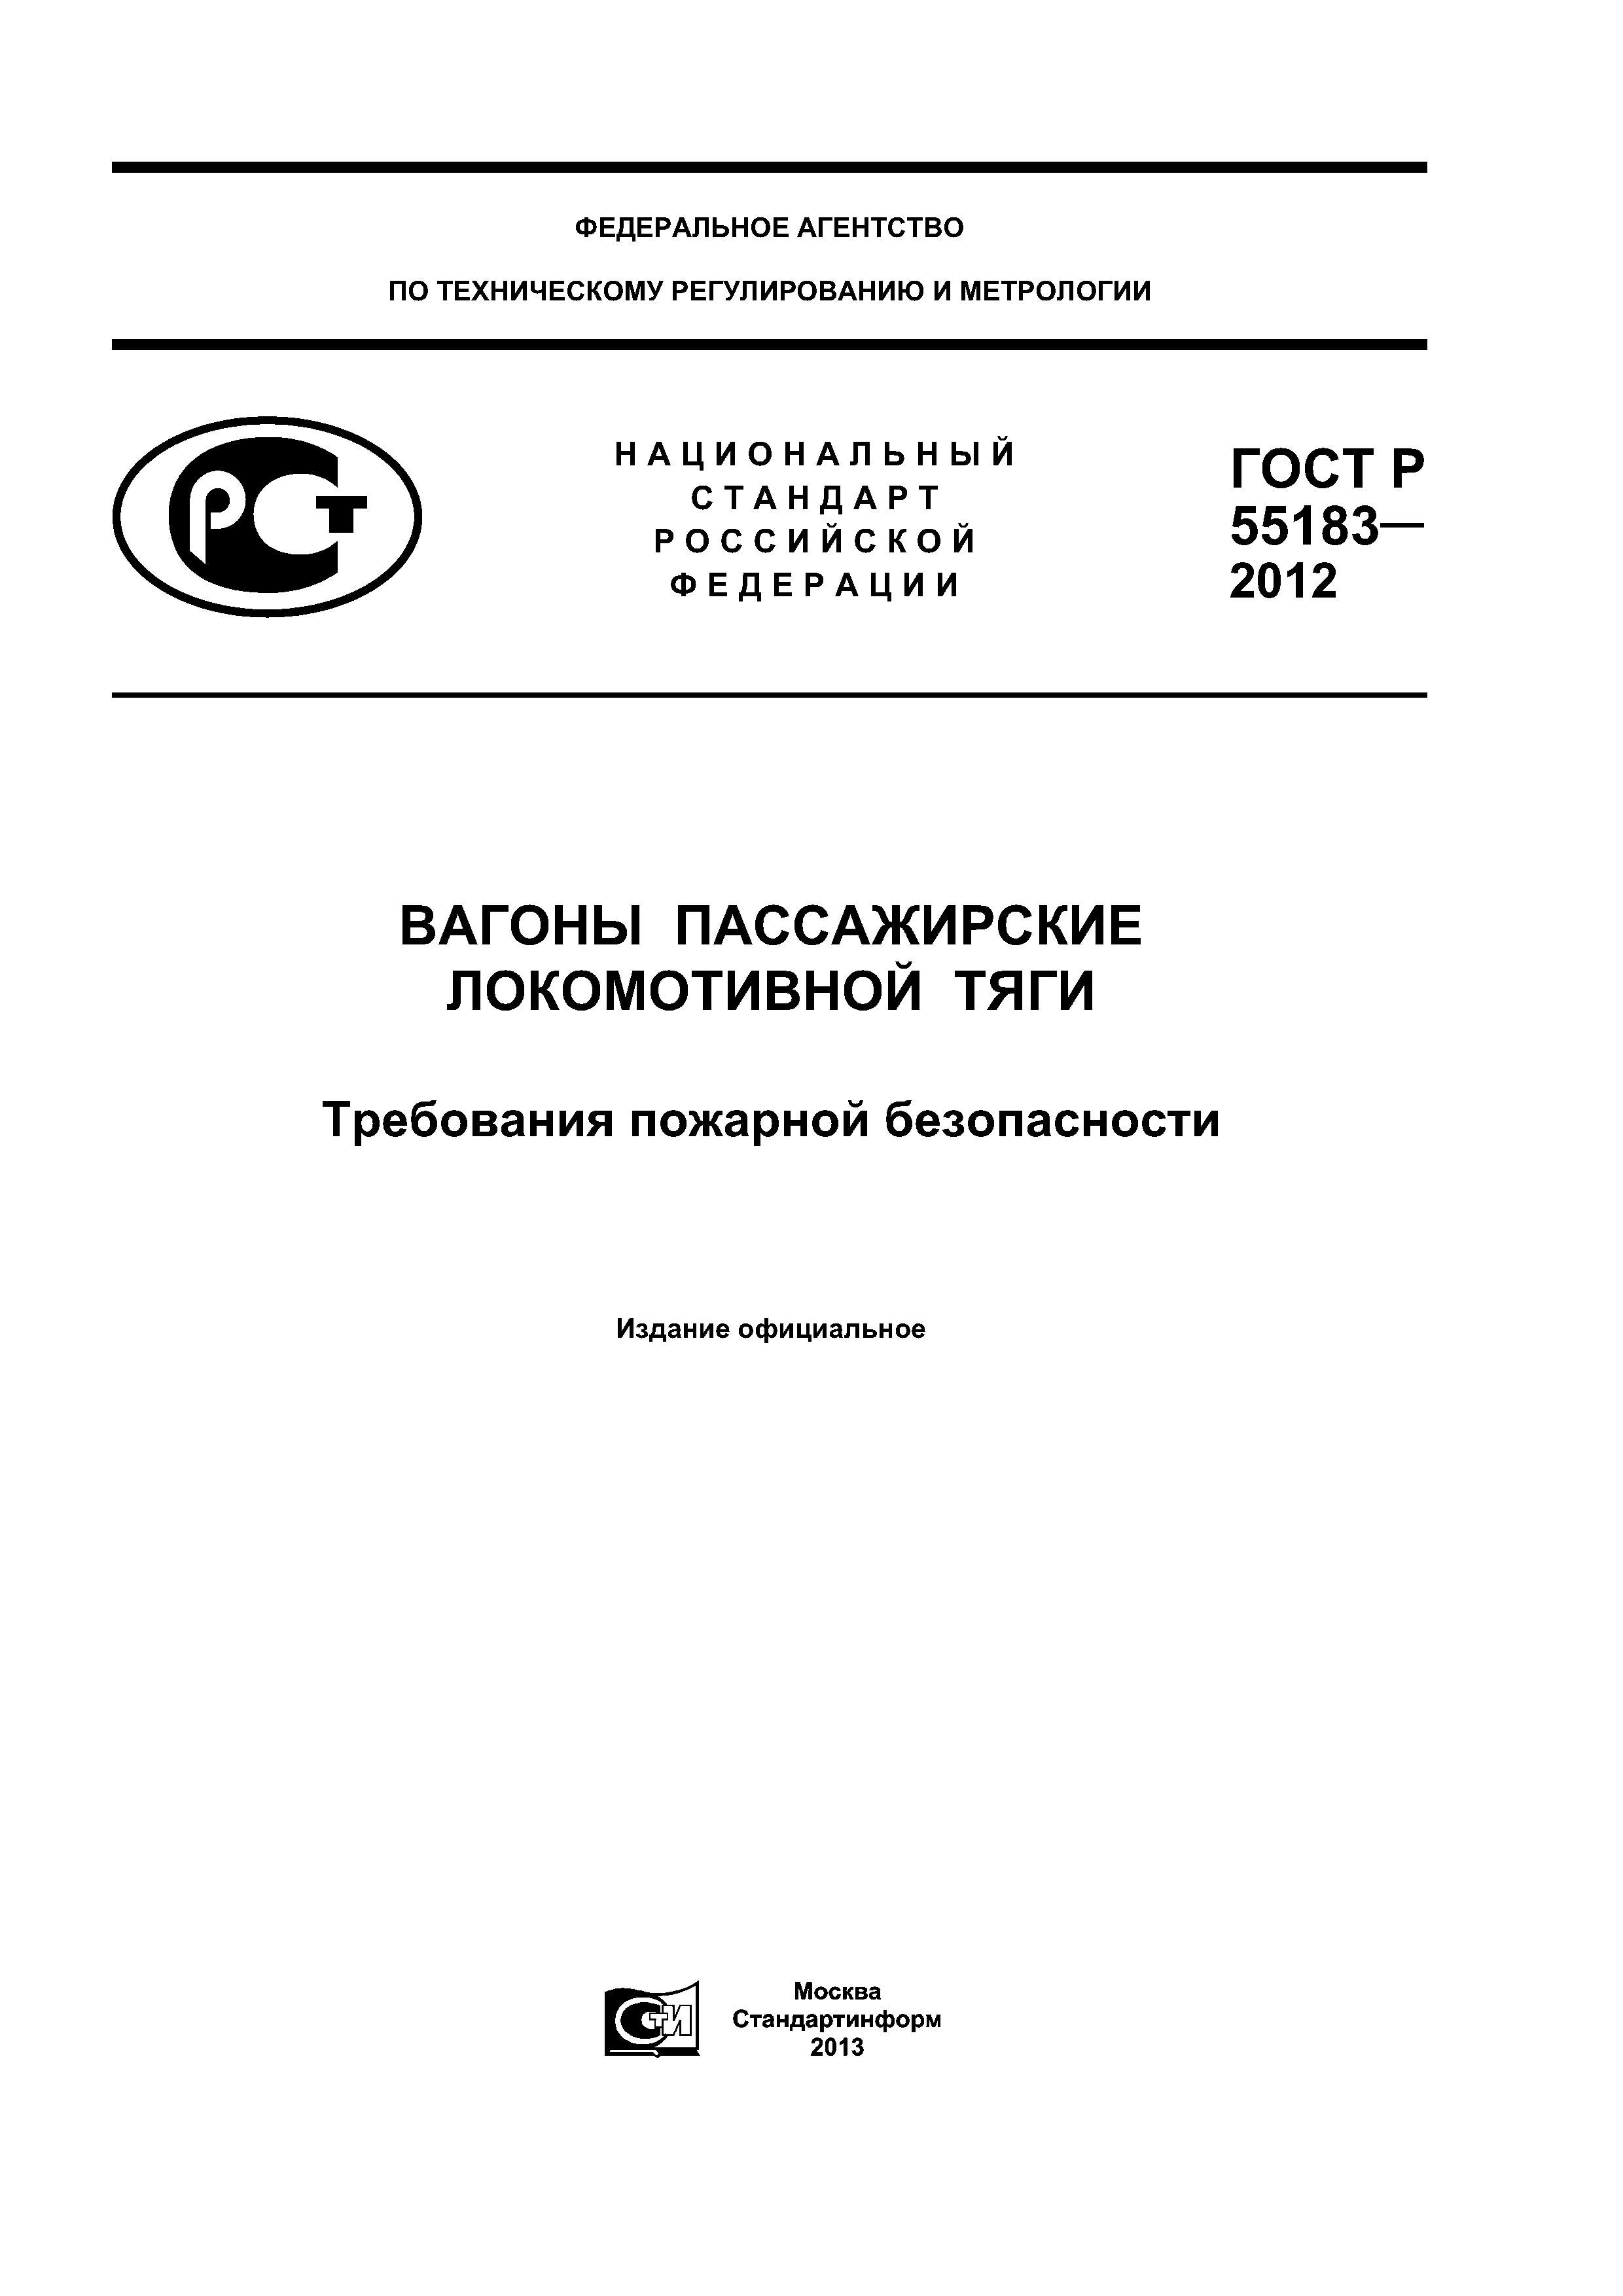 ГОСТ Р 55183-2012